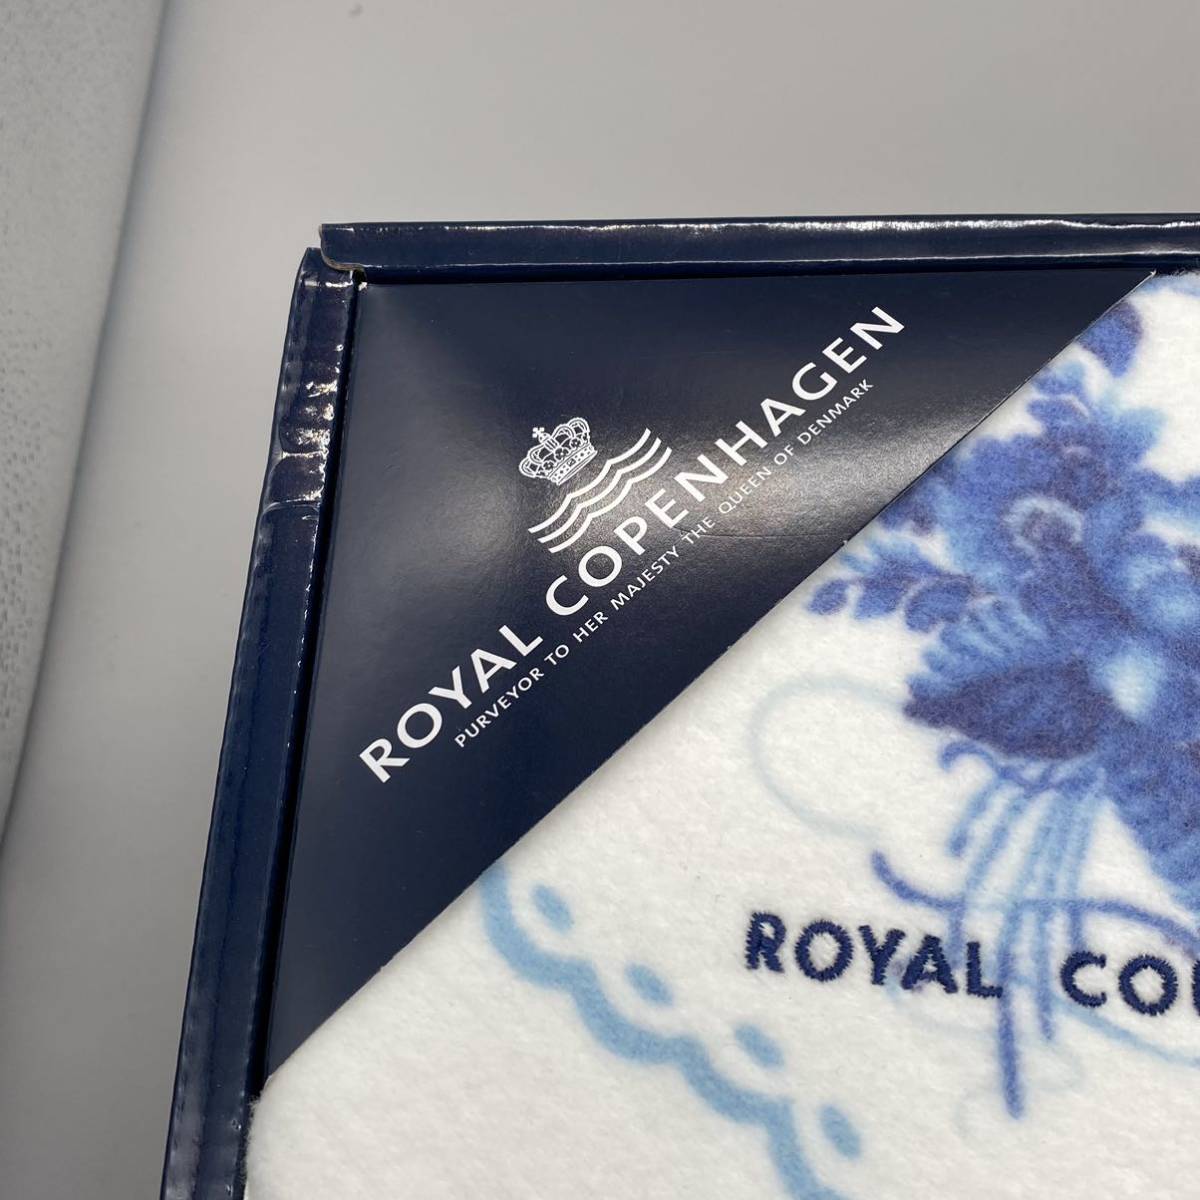 [ free shipping ] Royal Copenhagen /ROYAL COPENHAGEN/ regular goods / new goods unused / cotton blanket /2 pieces set / made in China / Showa era west river corporation (326)